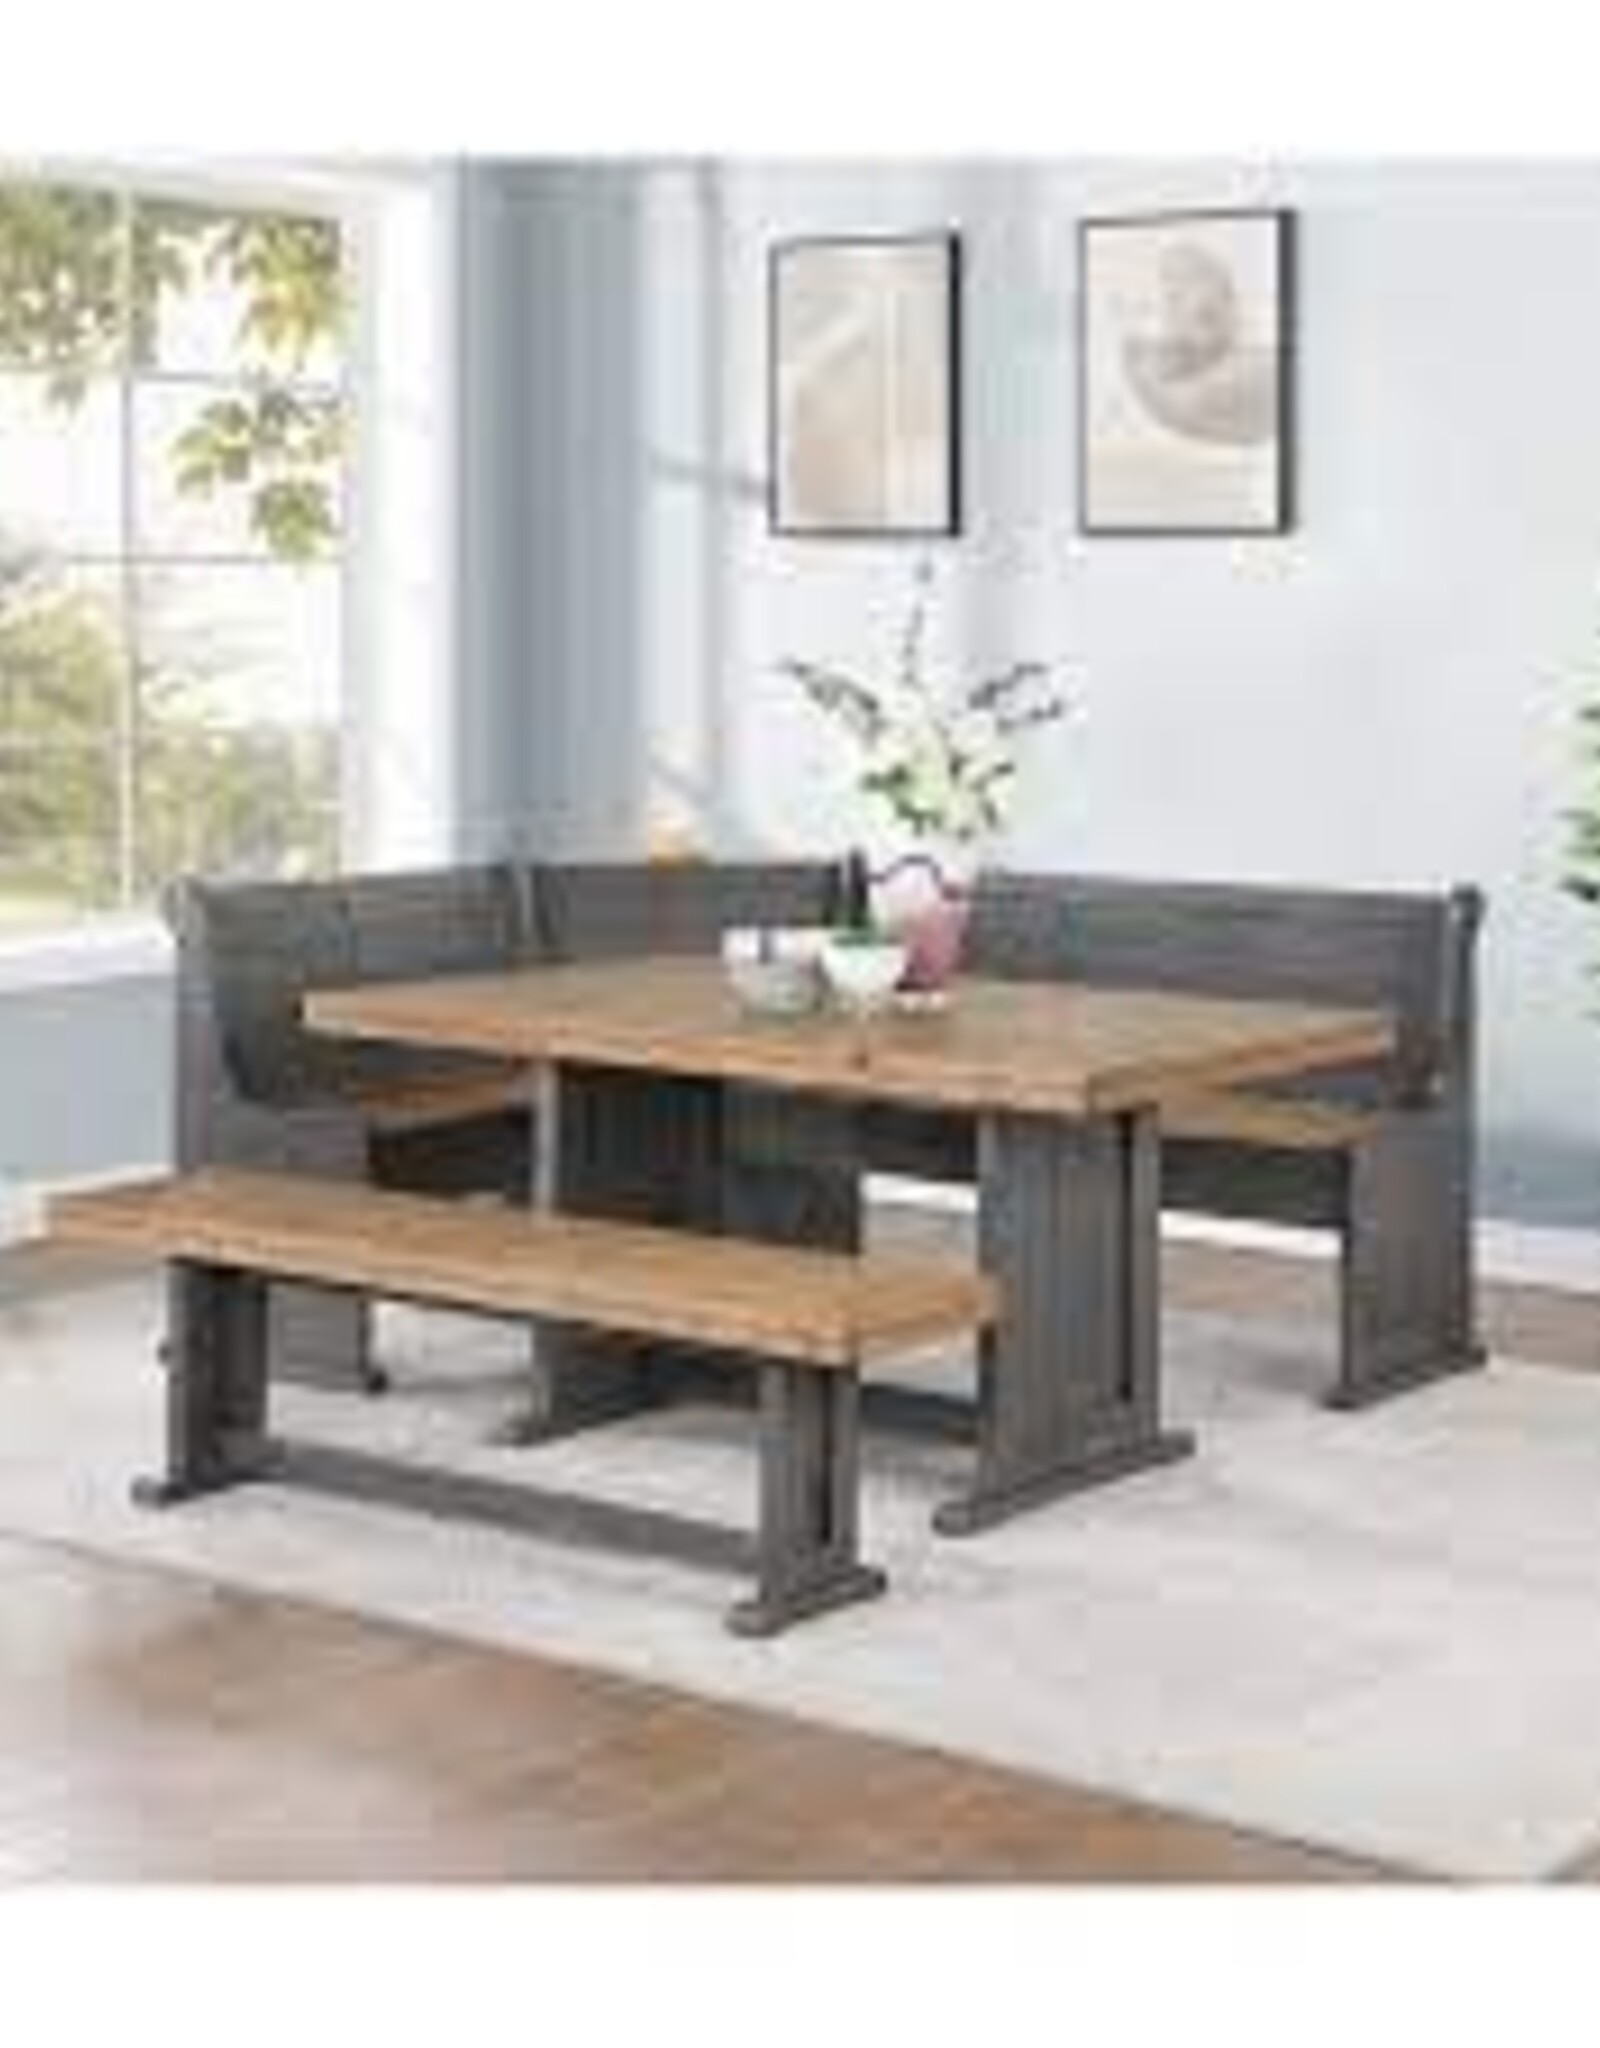 Omaha Nook Table Set